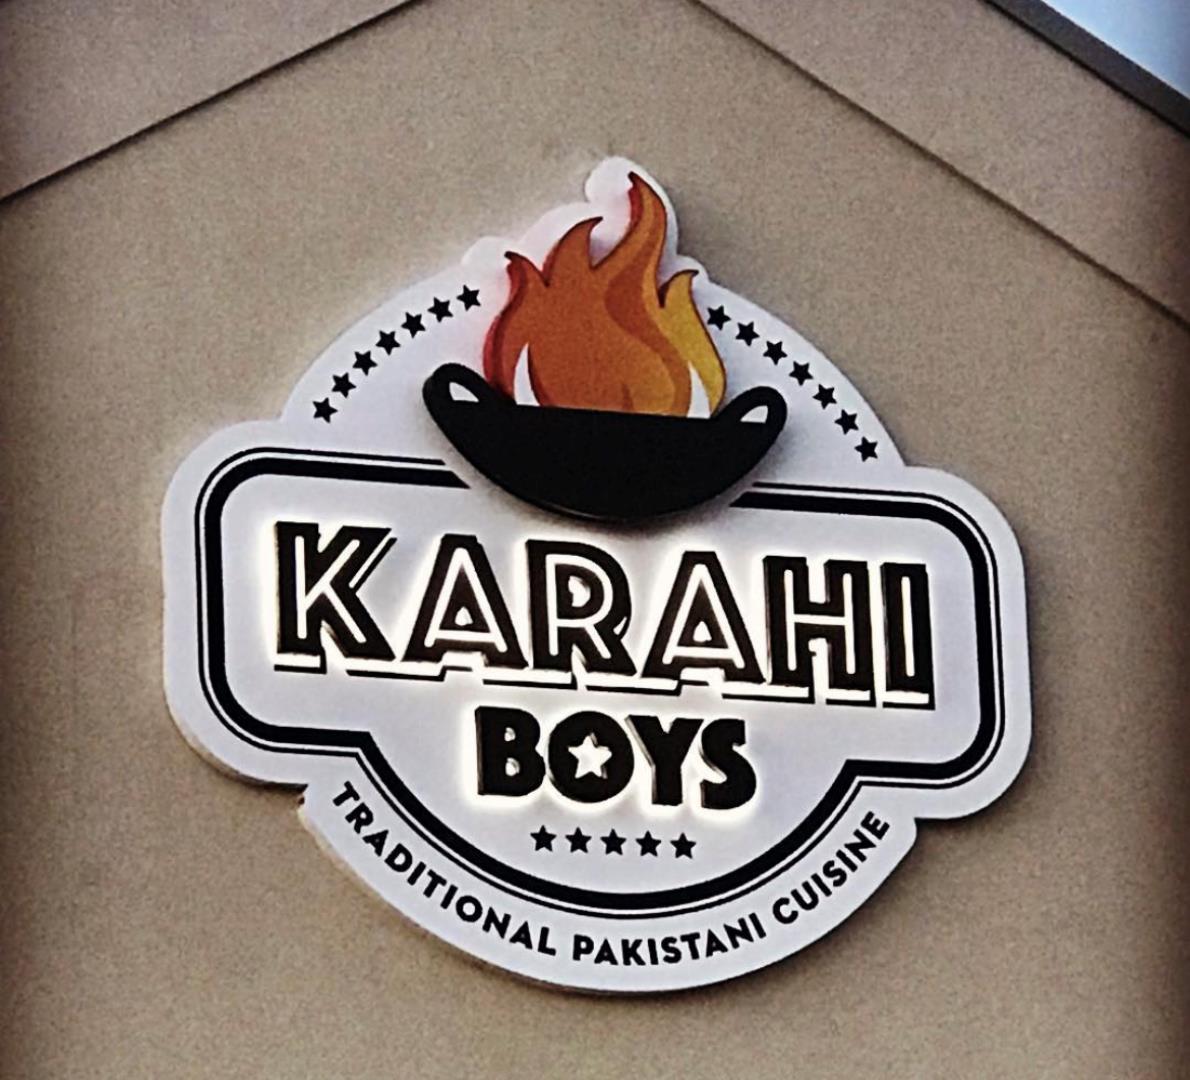 Karahi Boys - Ajax Restaurant - Picture